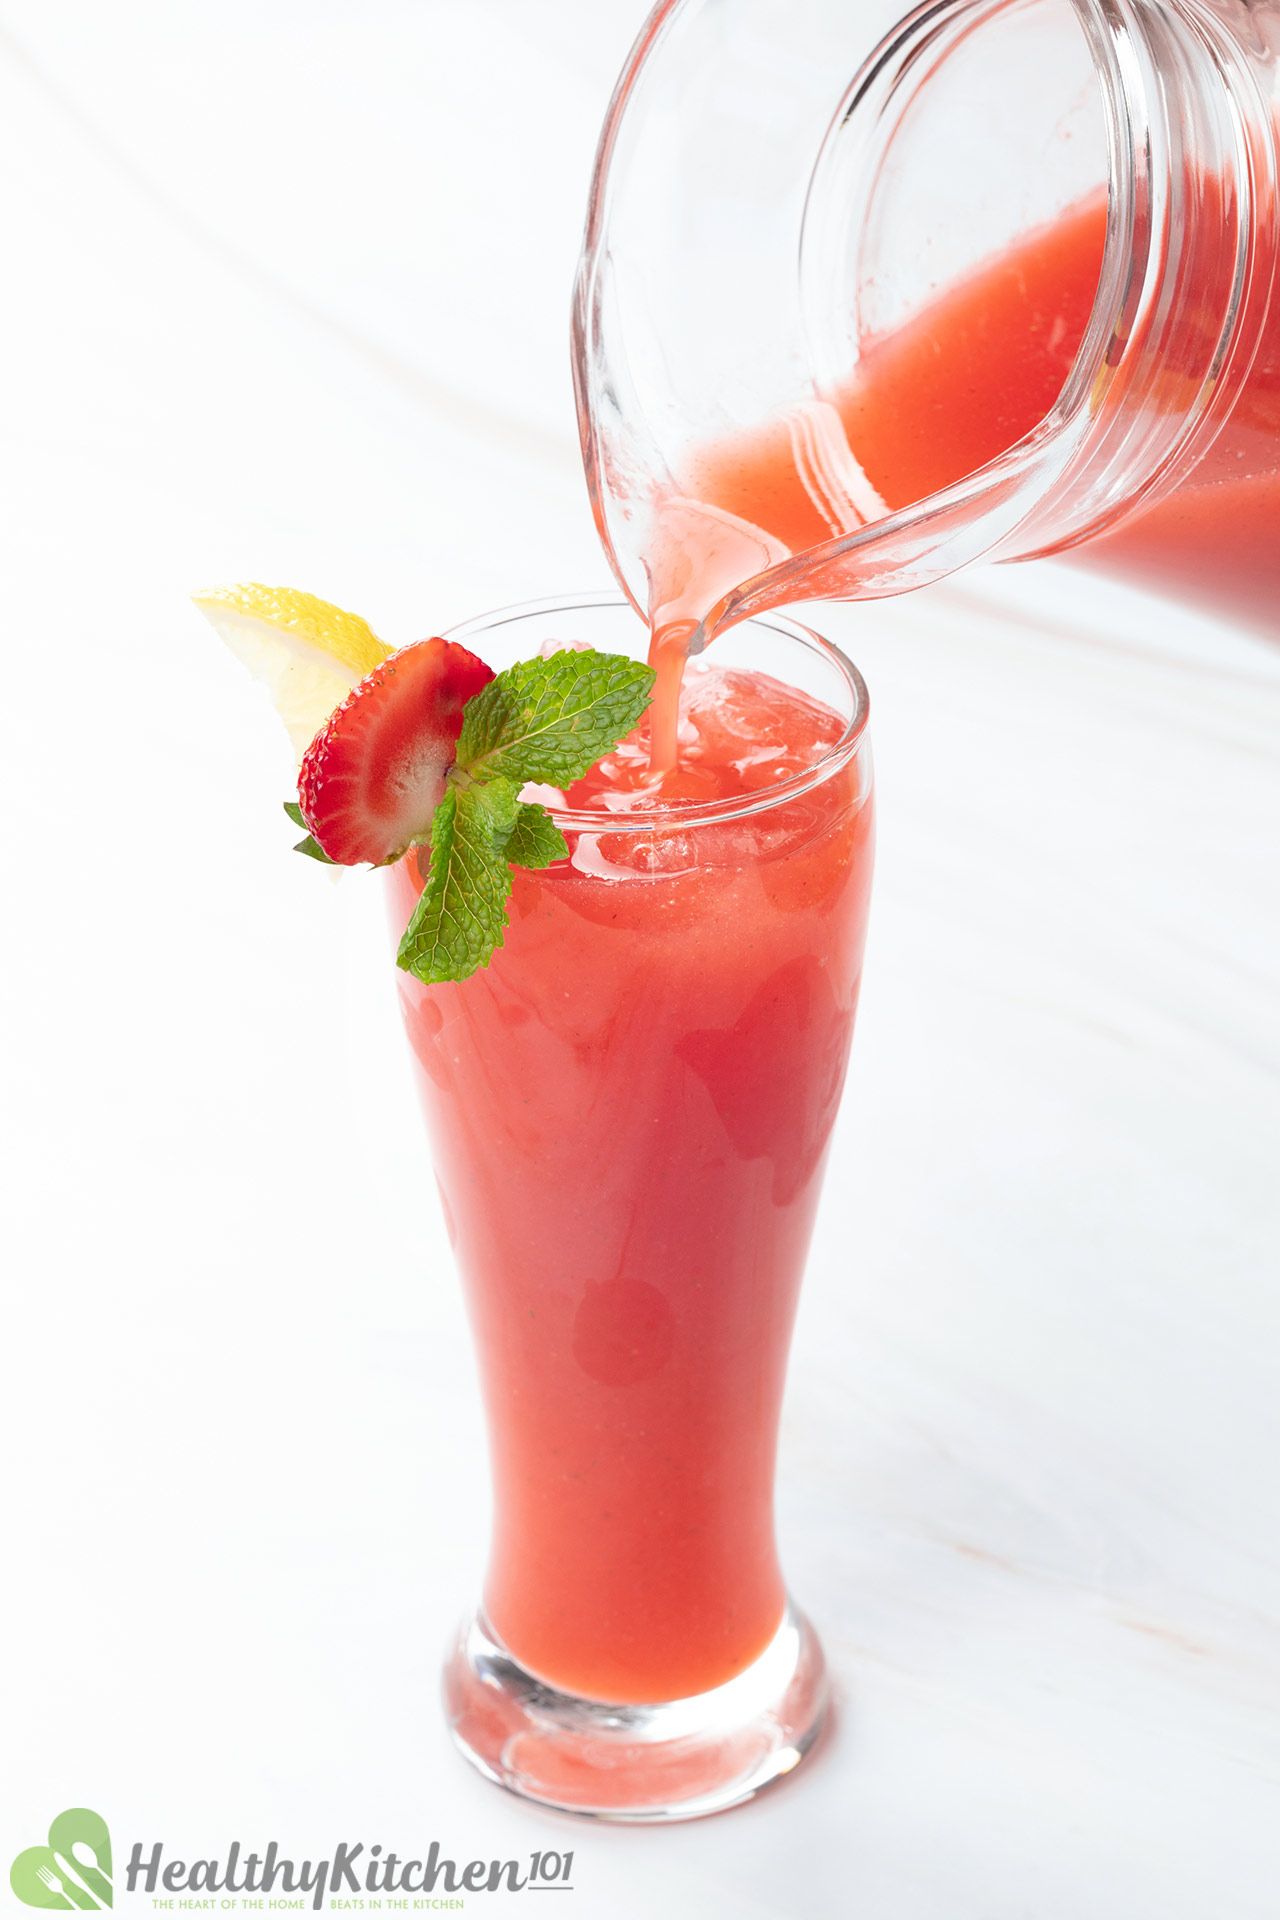 Benefits of Strawberry Juice